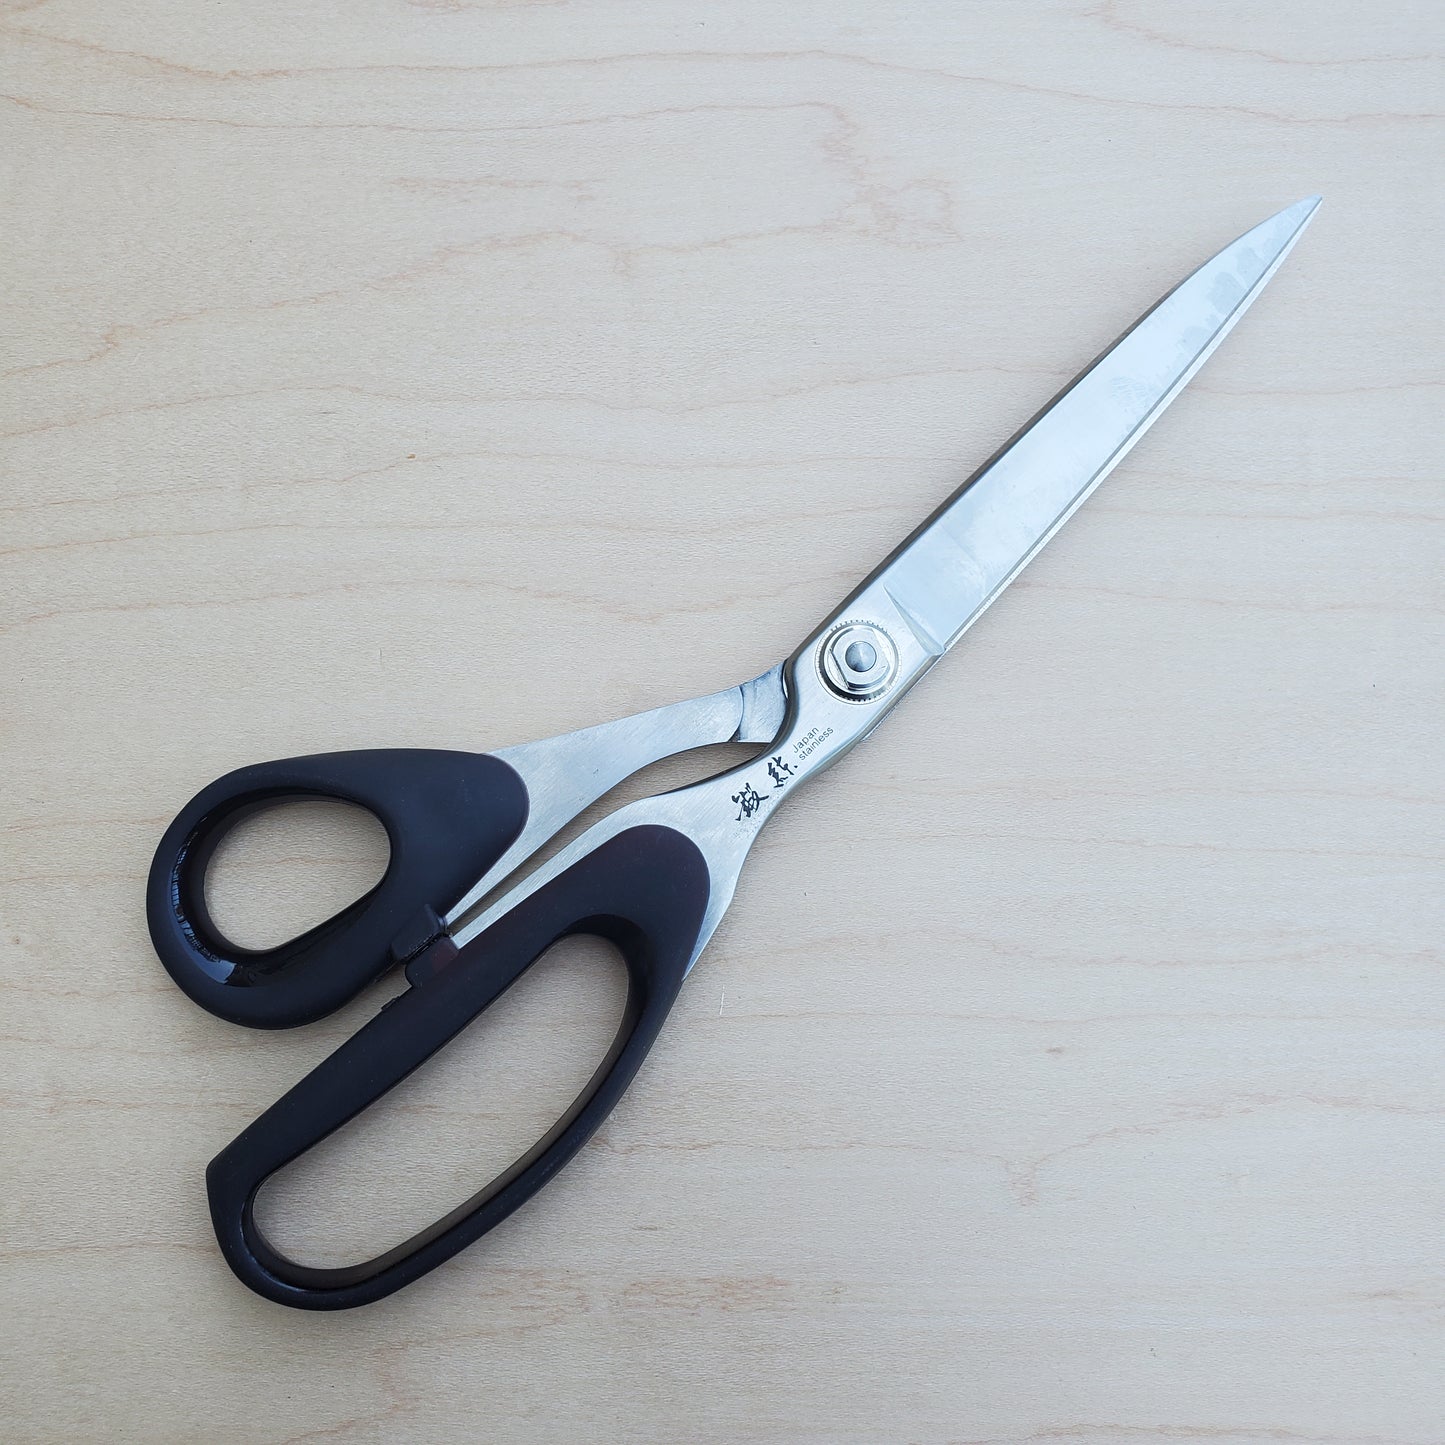 Silky Sewing Scissors - DBC-270